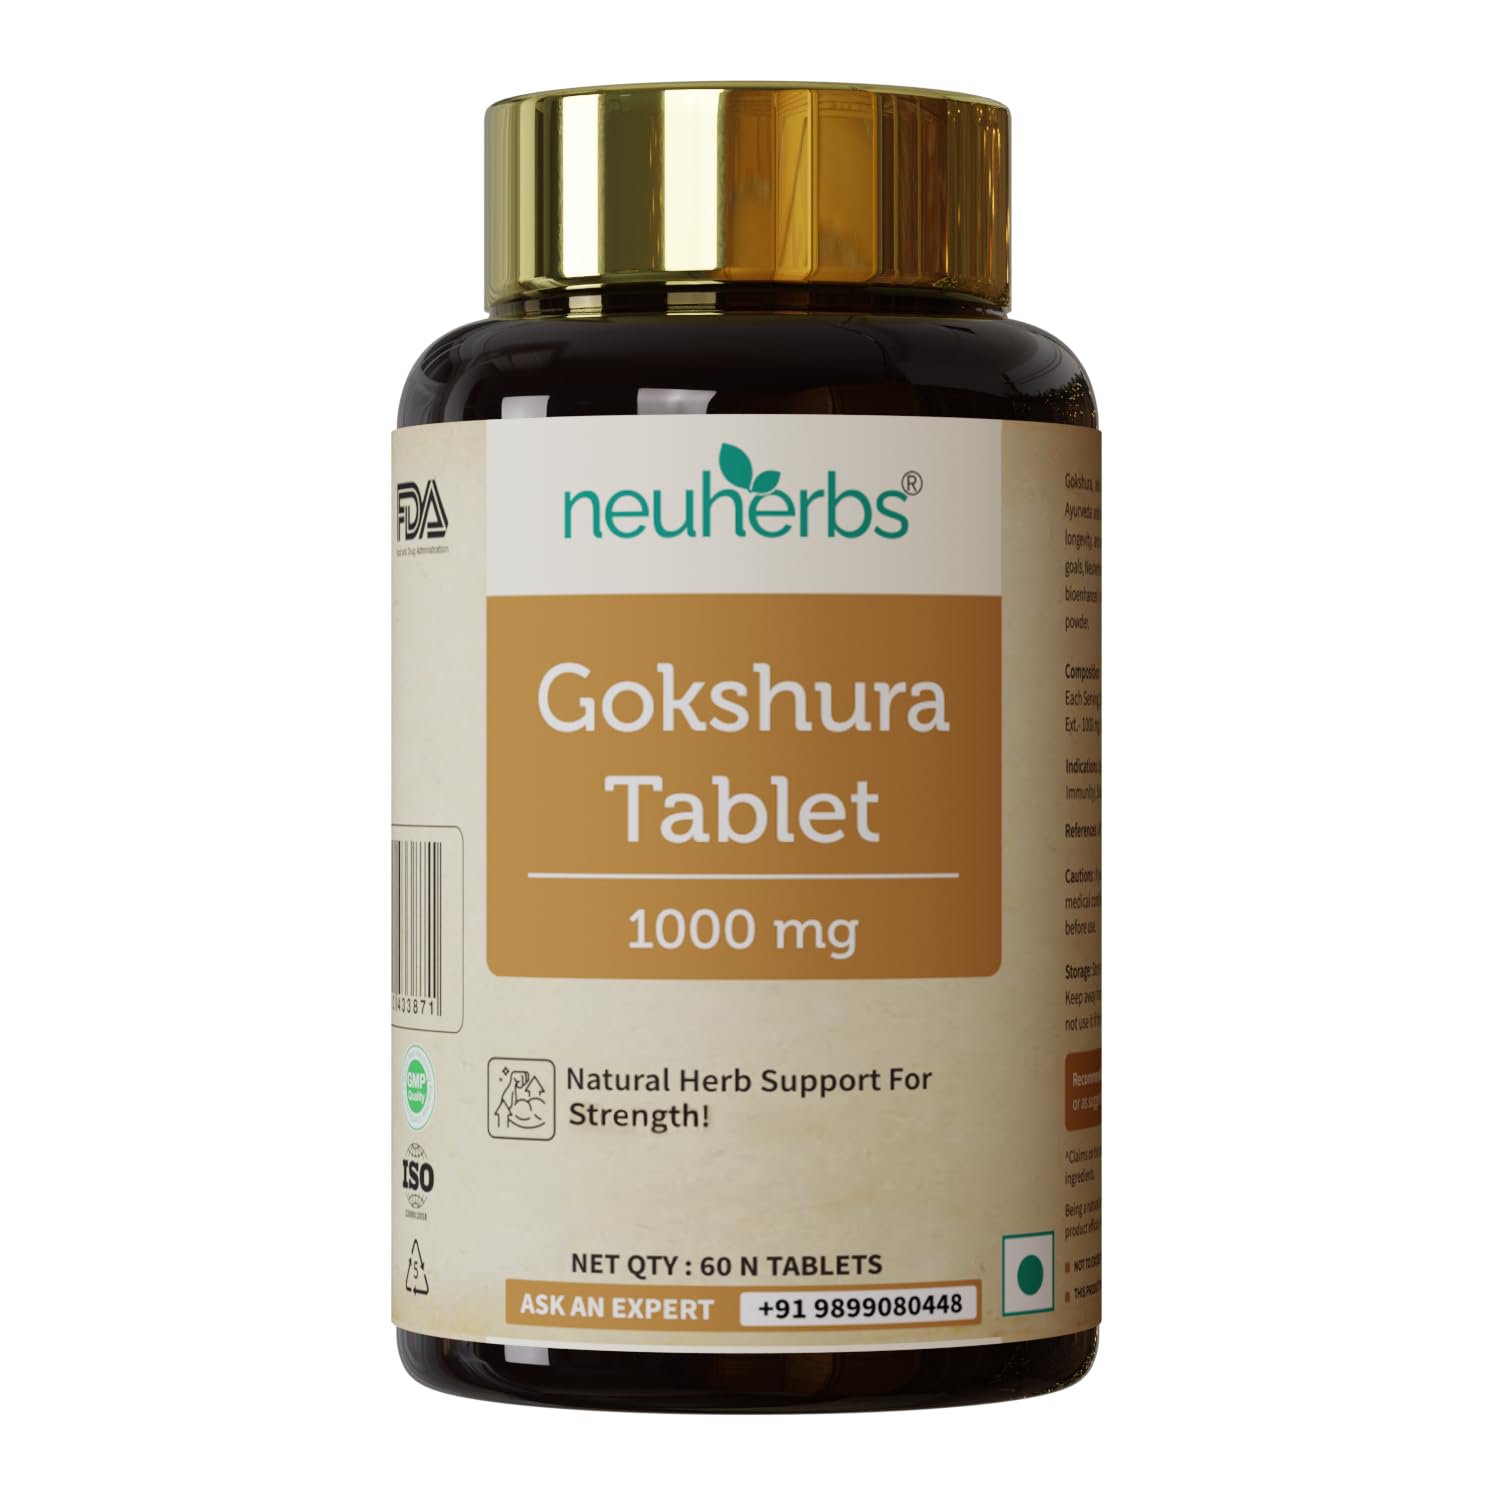 Neuherbs Gokshura Tablet | Helps To Support Energy & Strength - 60 Tablets |